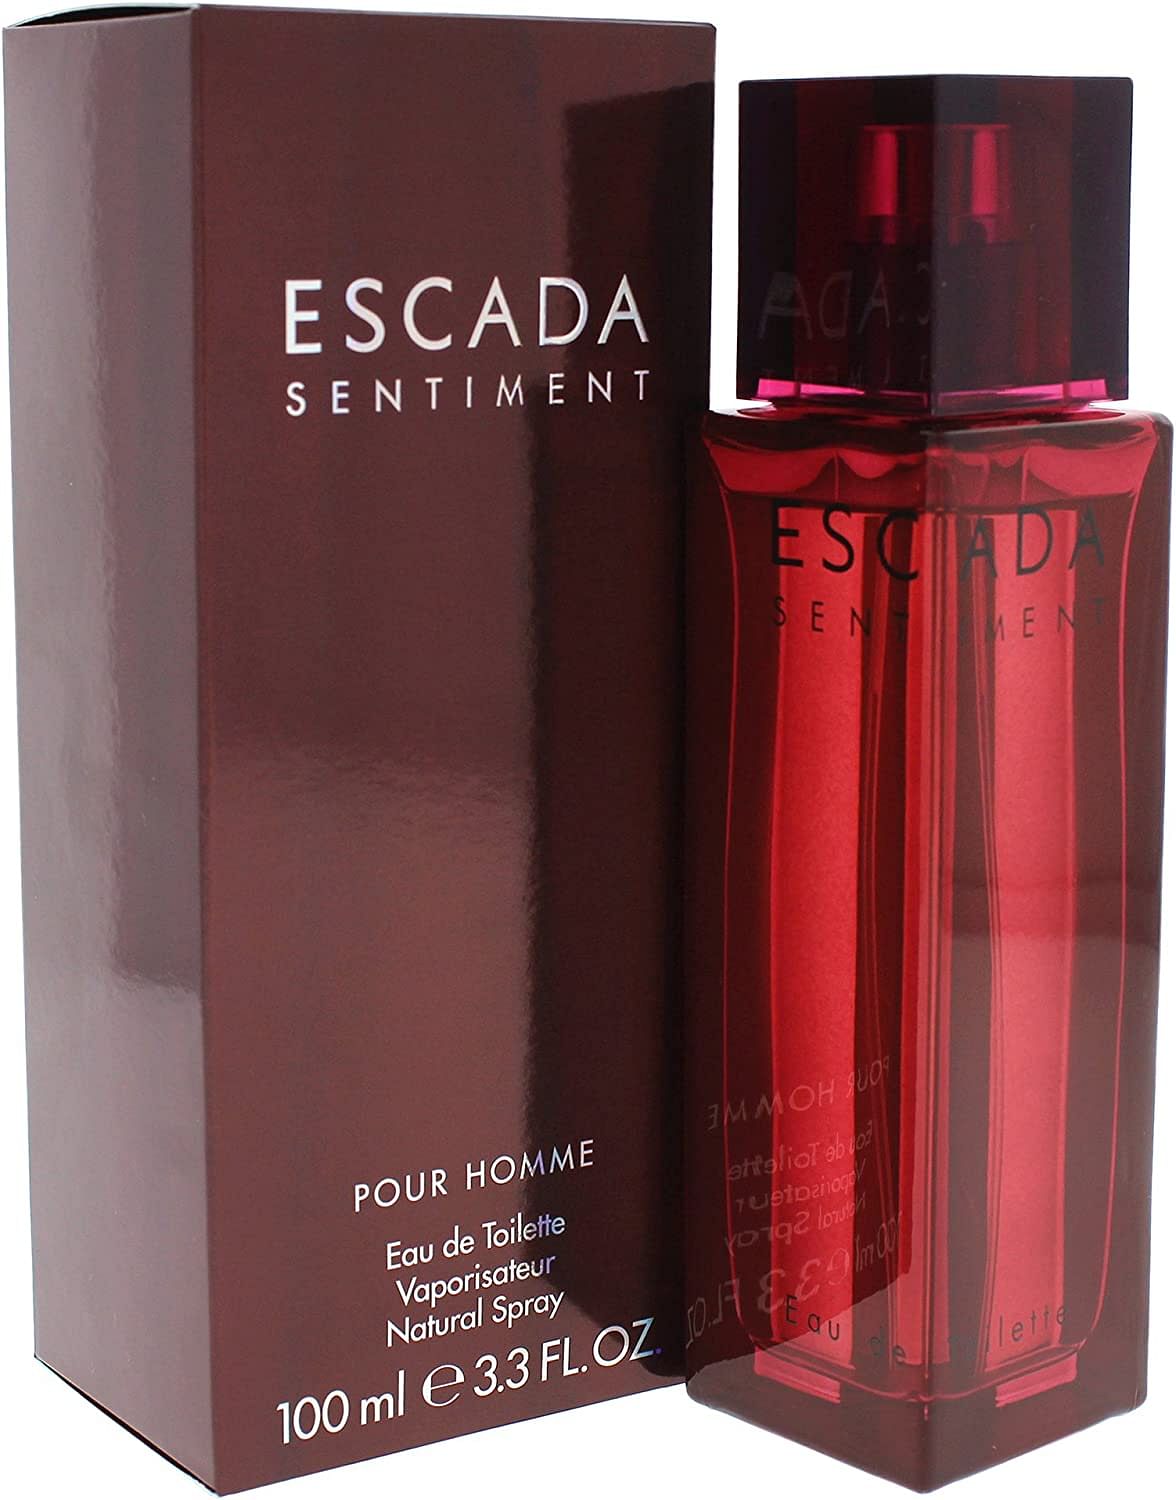 Escada SentiMent - Perfume for Men, 100 ml - EDT Spray